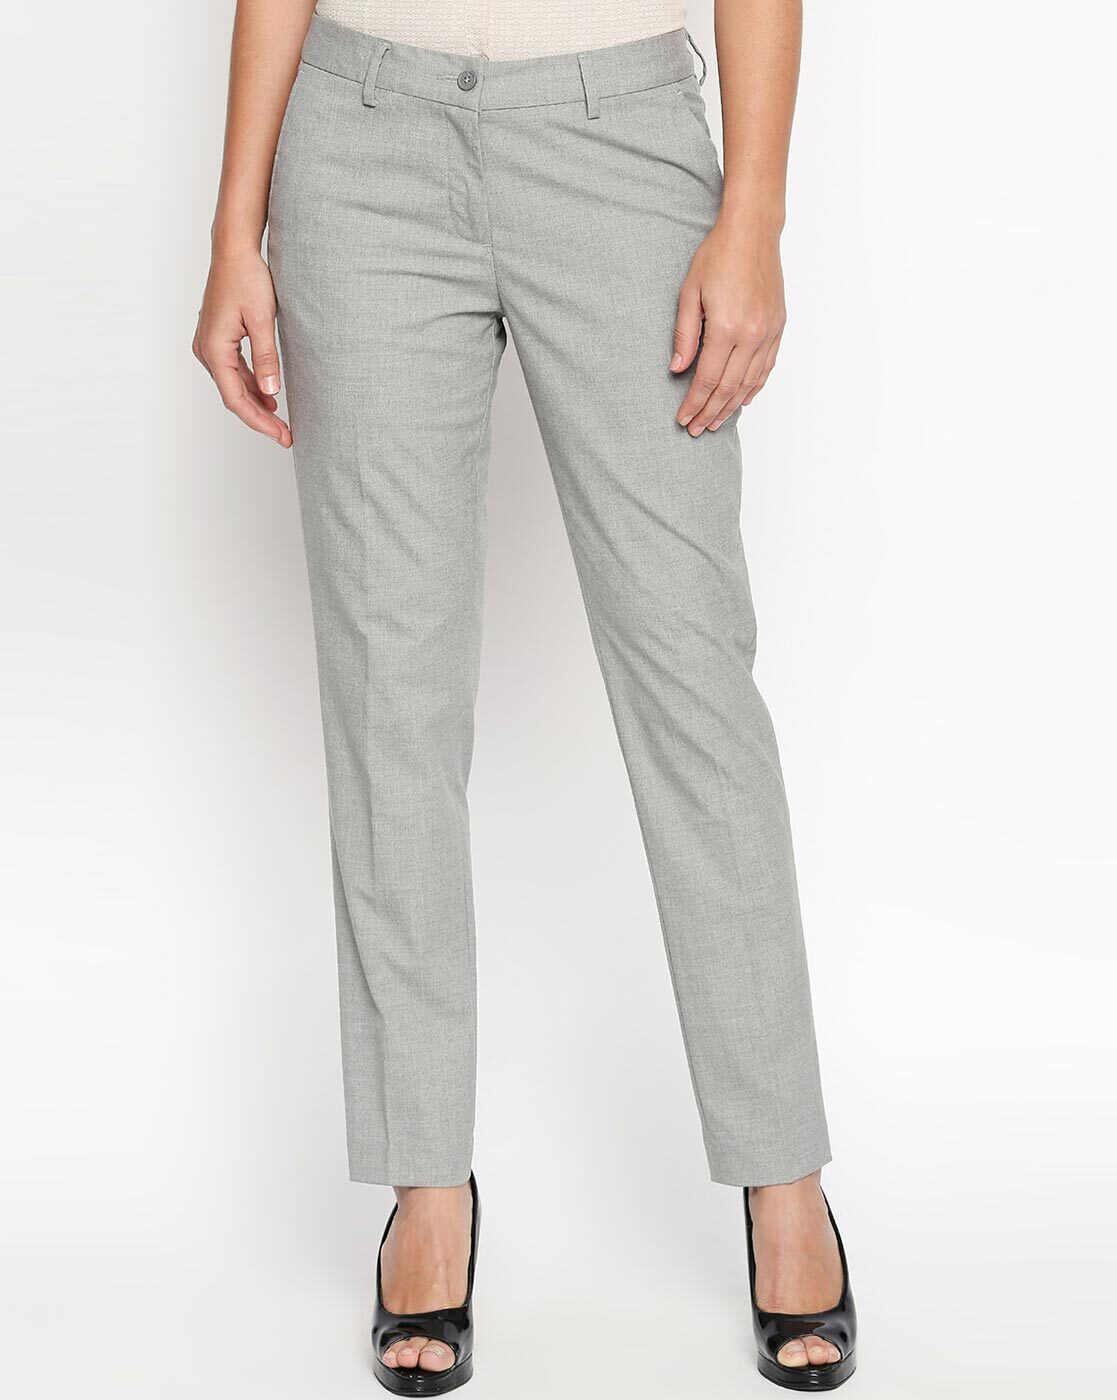 Medium Blue Self Design Trousers - Selling Fast at Pantaloons.com